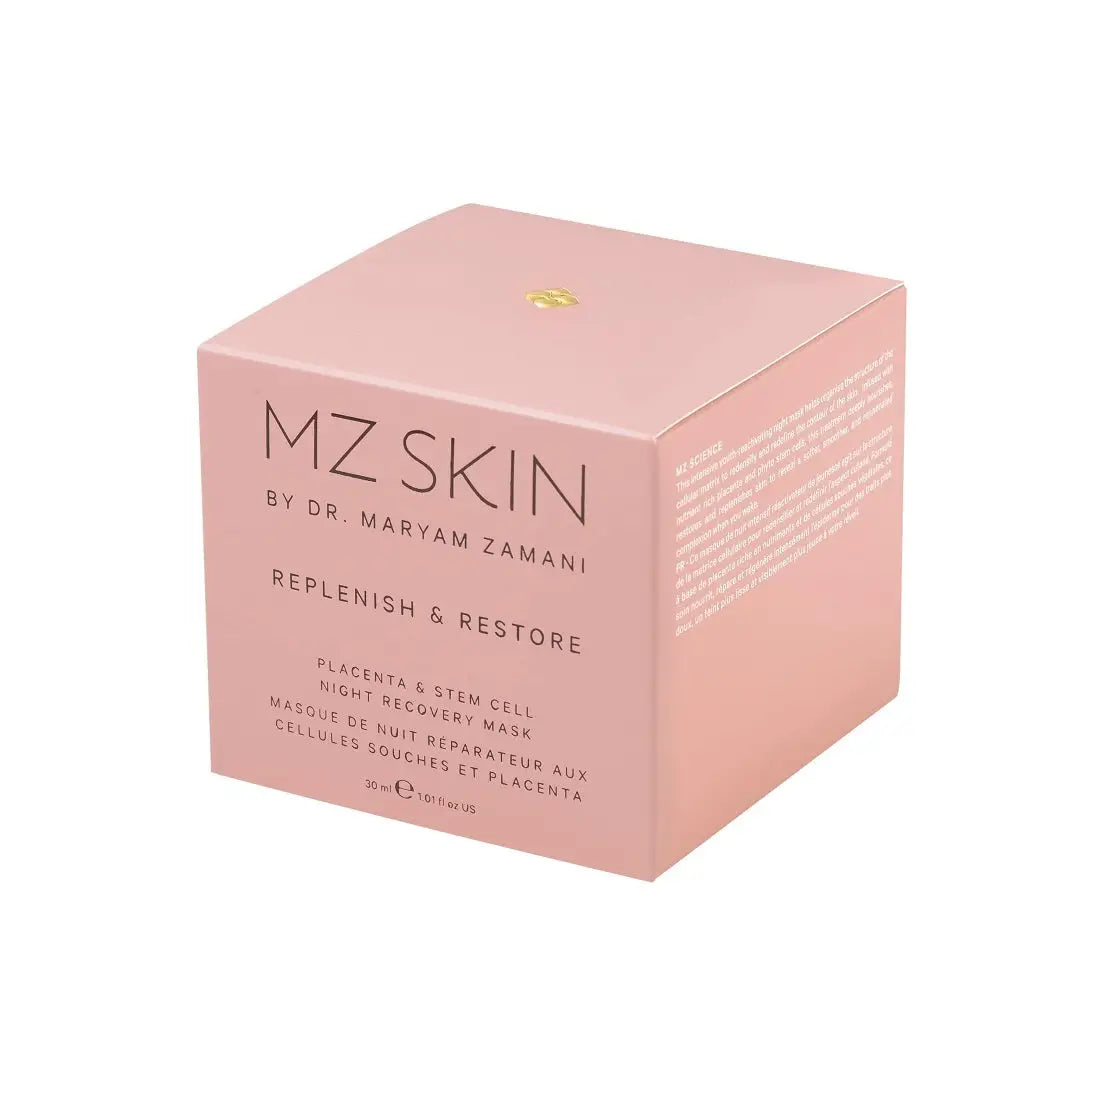 MZ Skin Replenish & Restore Mask 30ml - Free Shipping 